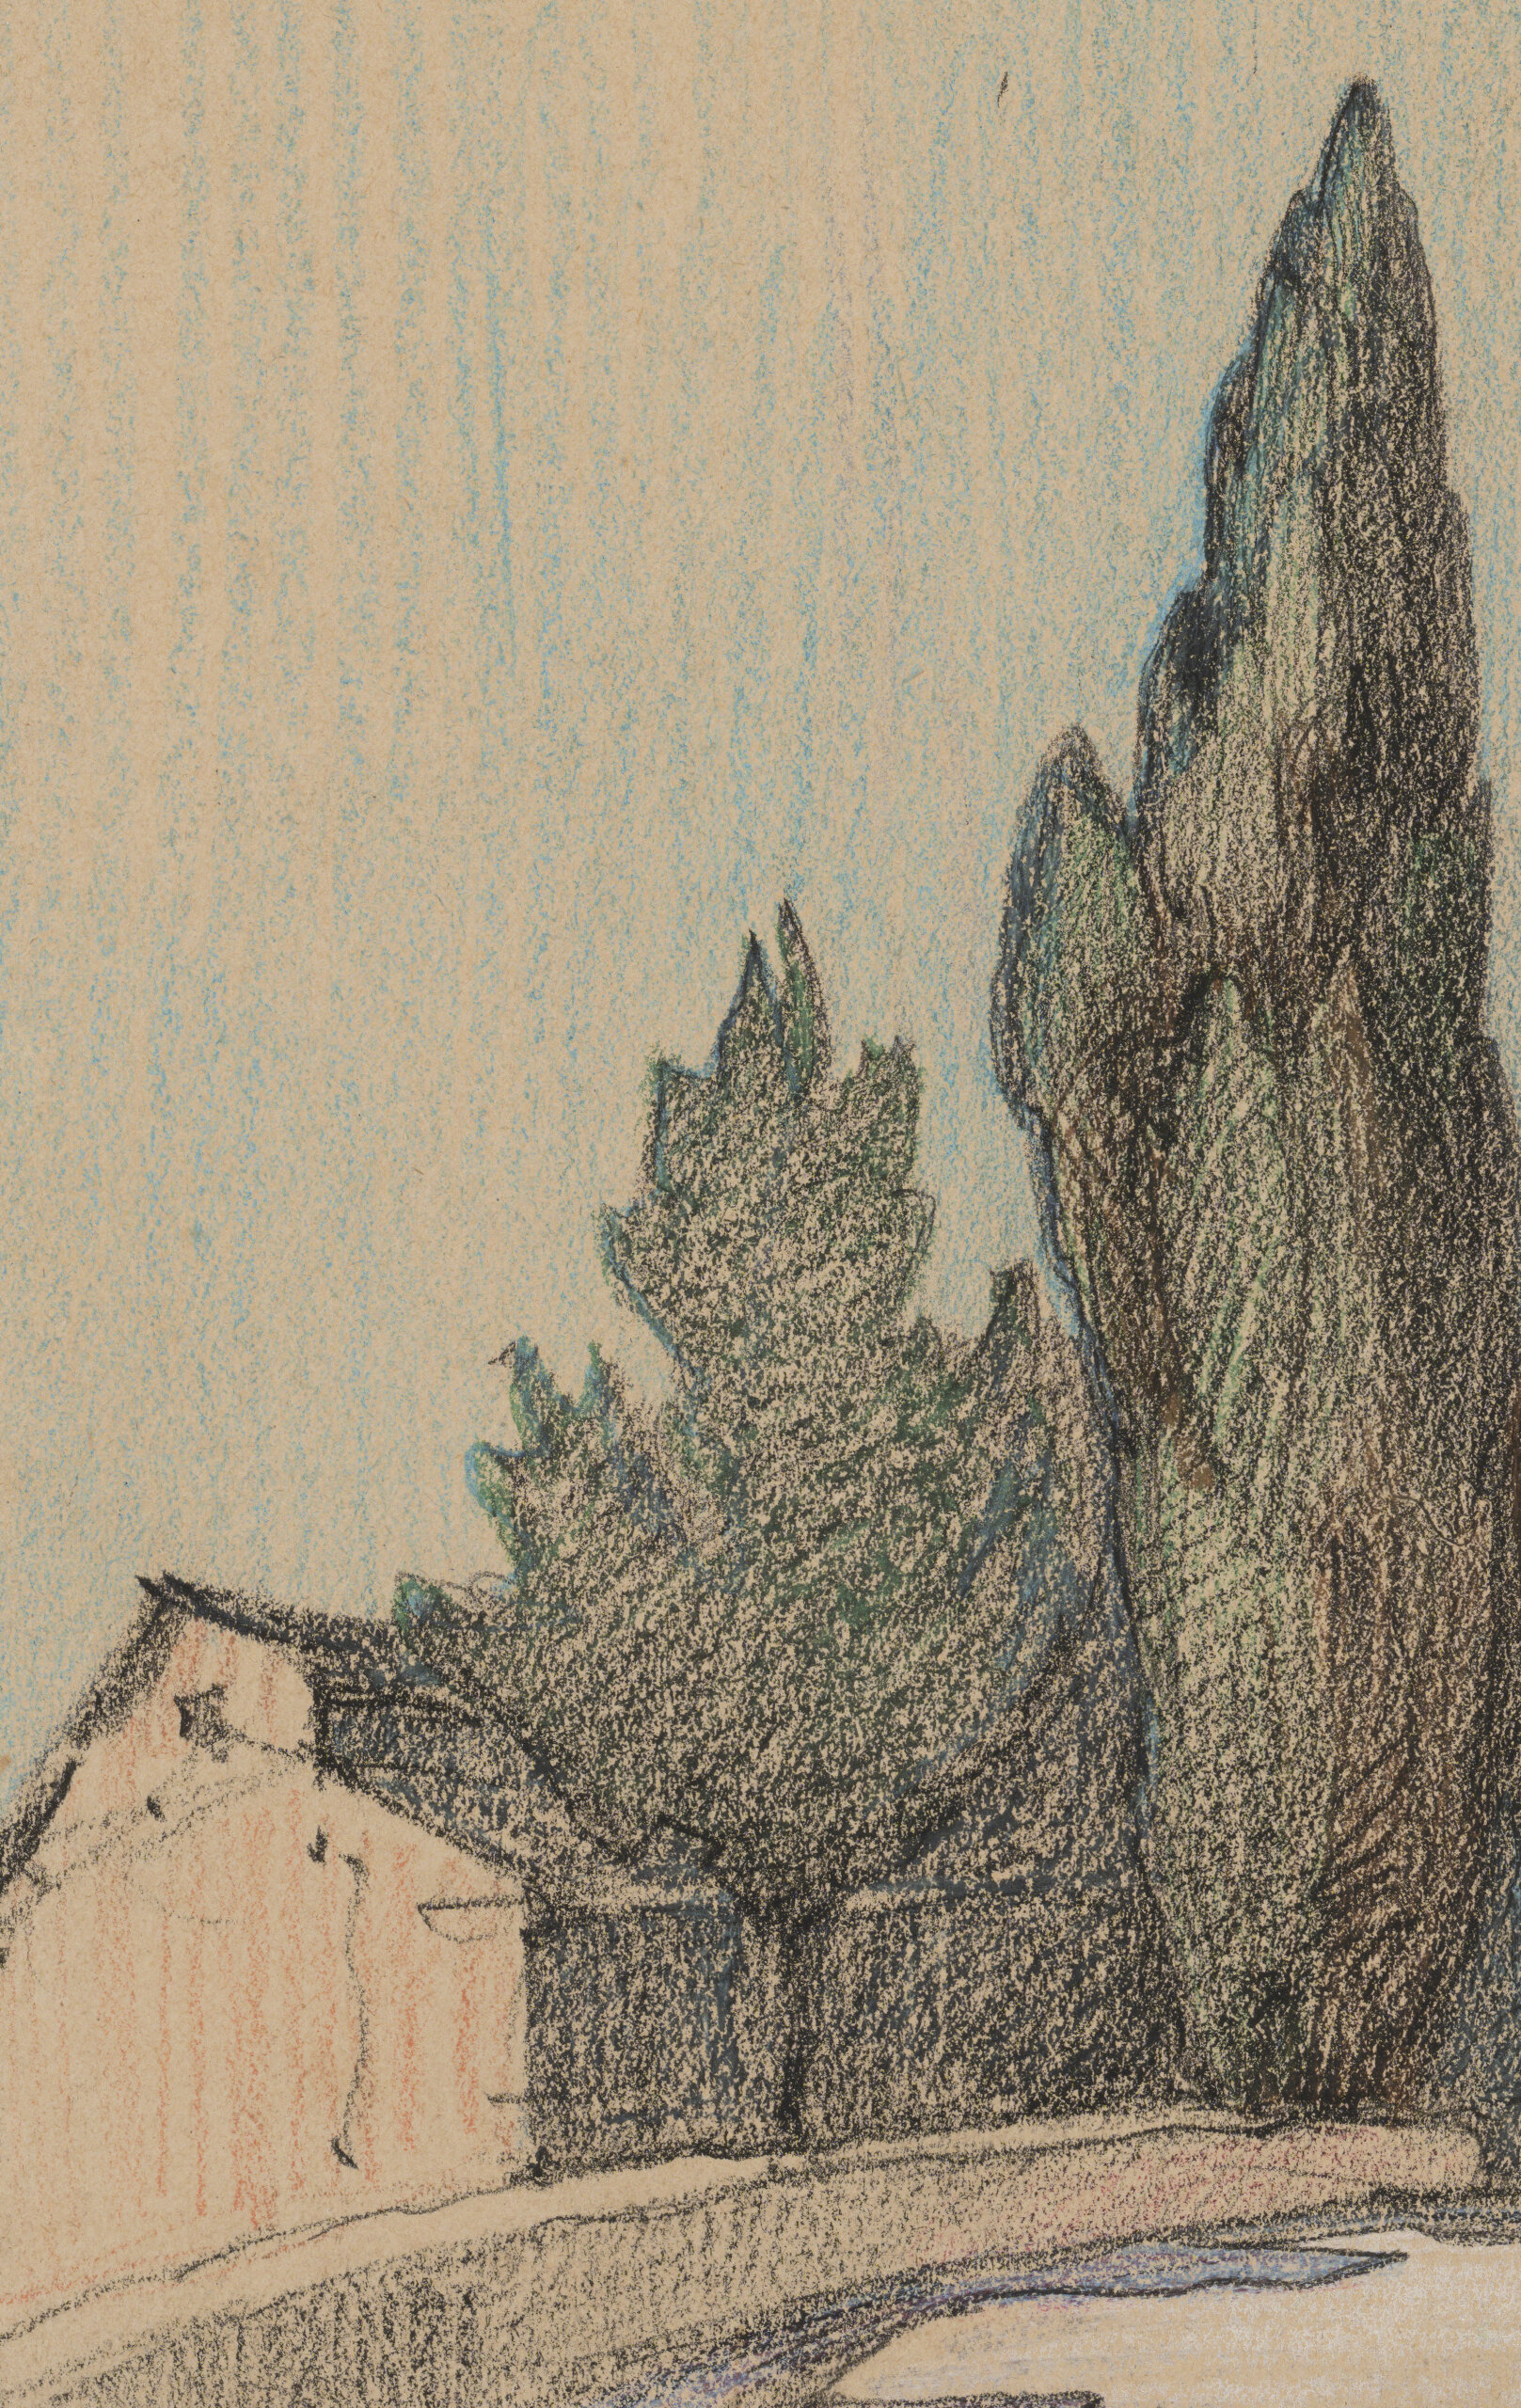 Roman Nyman “Cuenca”, 1923. 31 x 22,5 cm